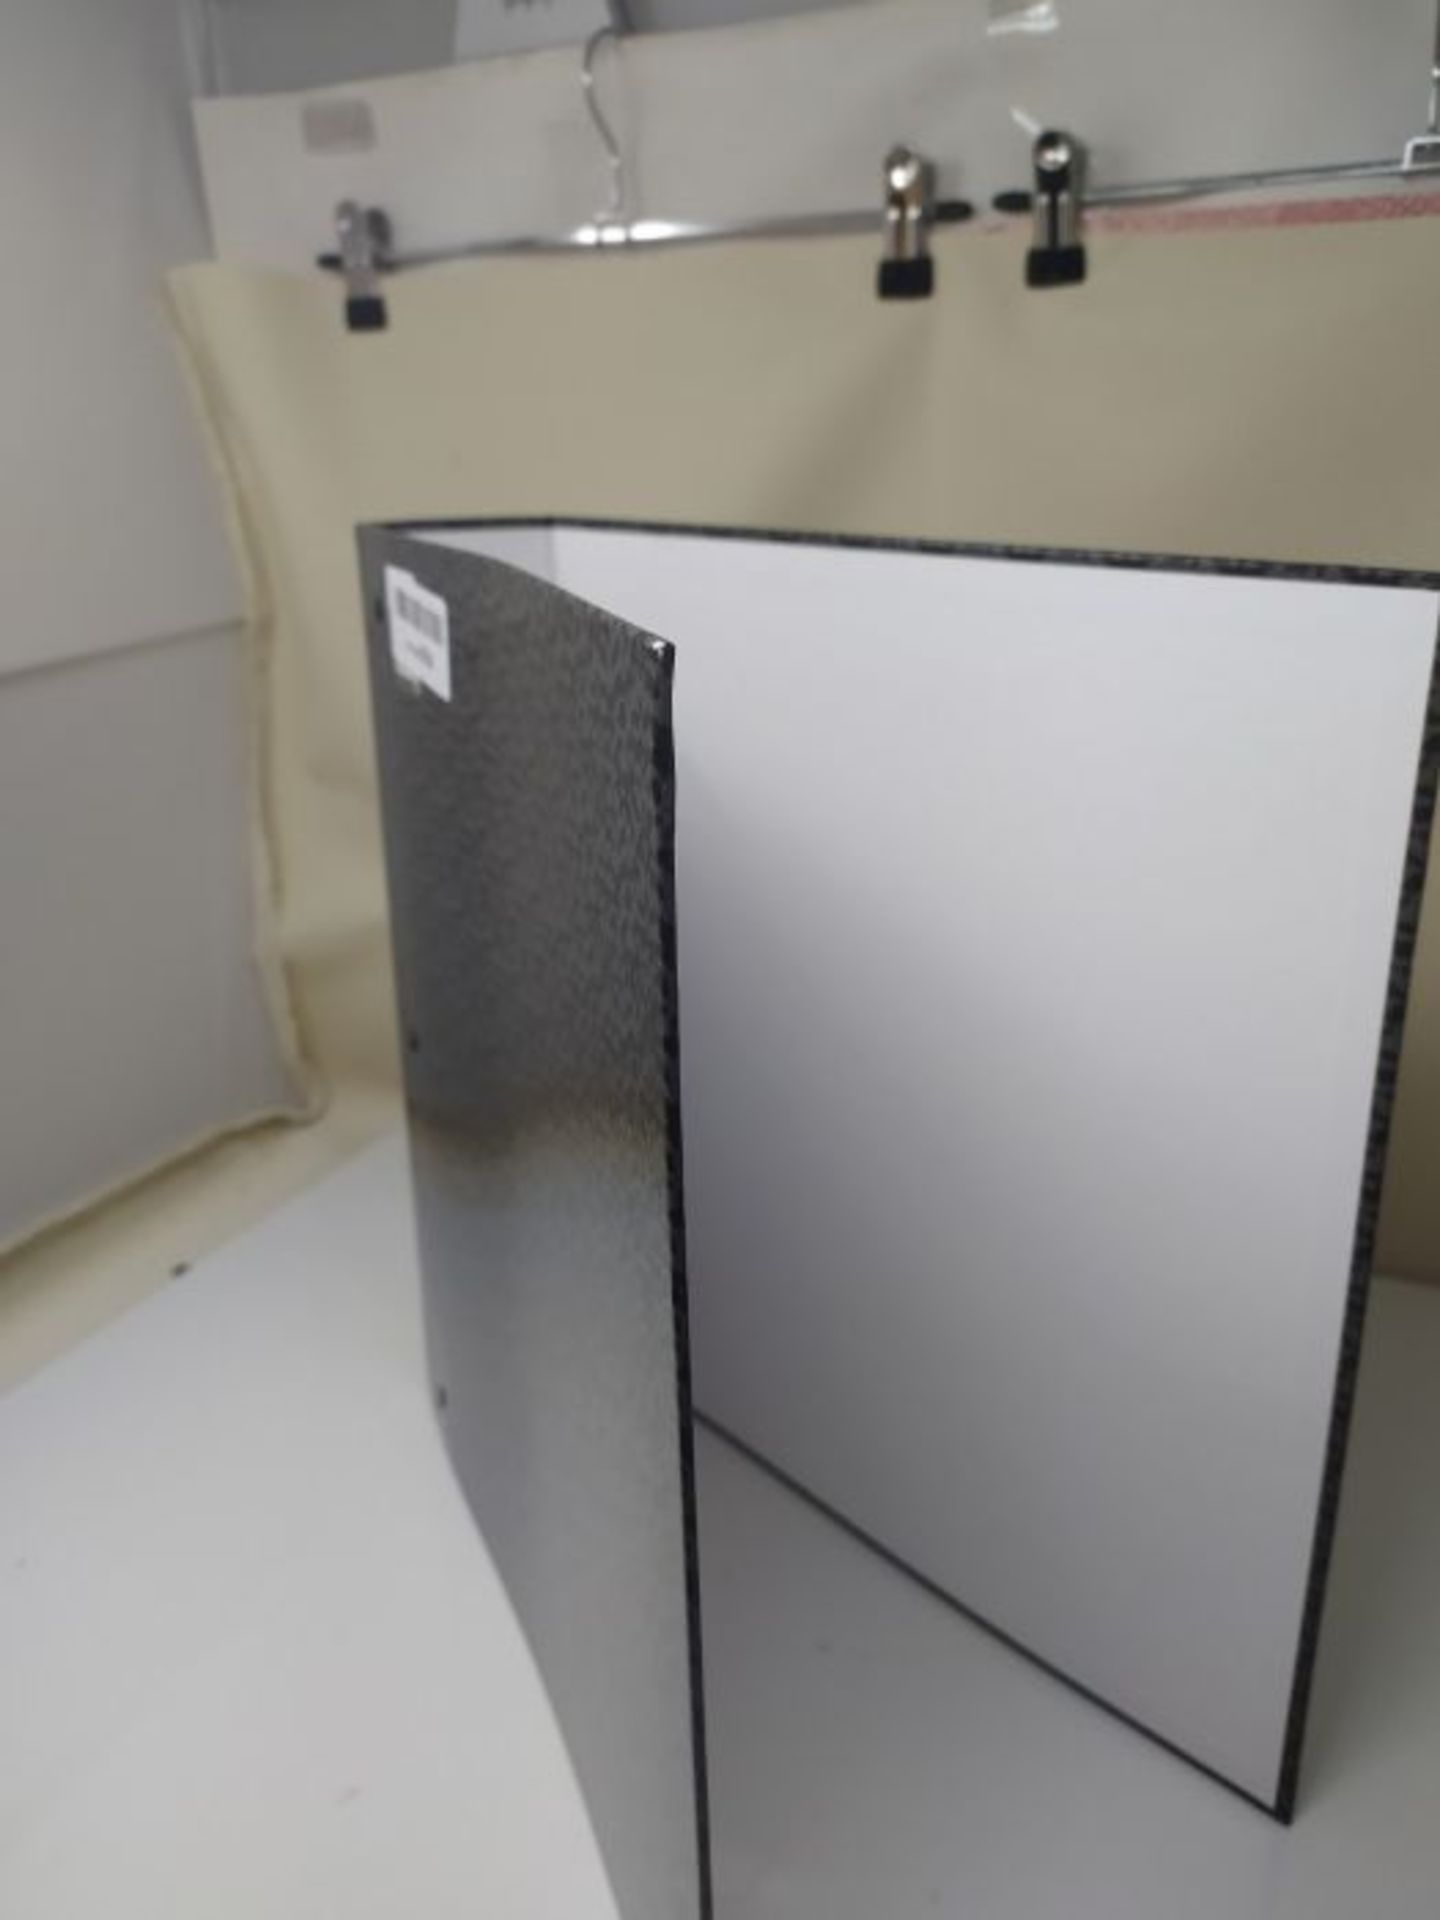 Hama 34 x 31 x 8 cm File for Negatives with slipcase, Black/Grey - Image 2 of 2